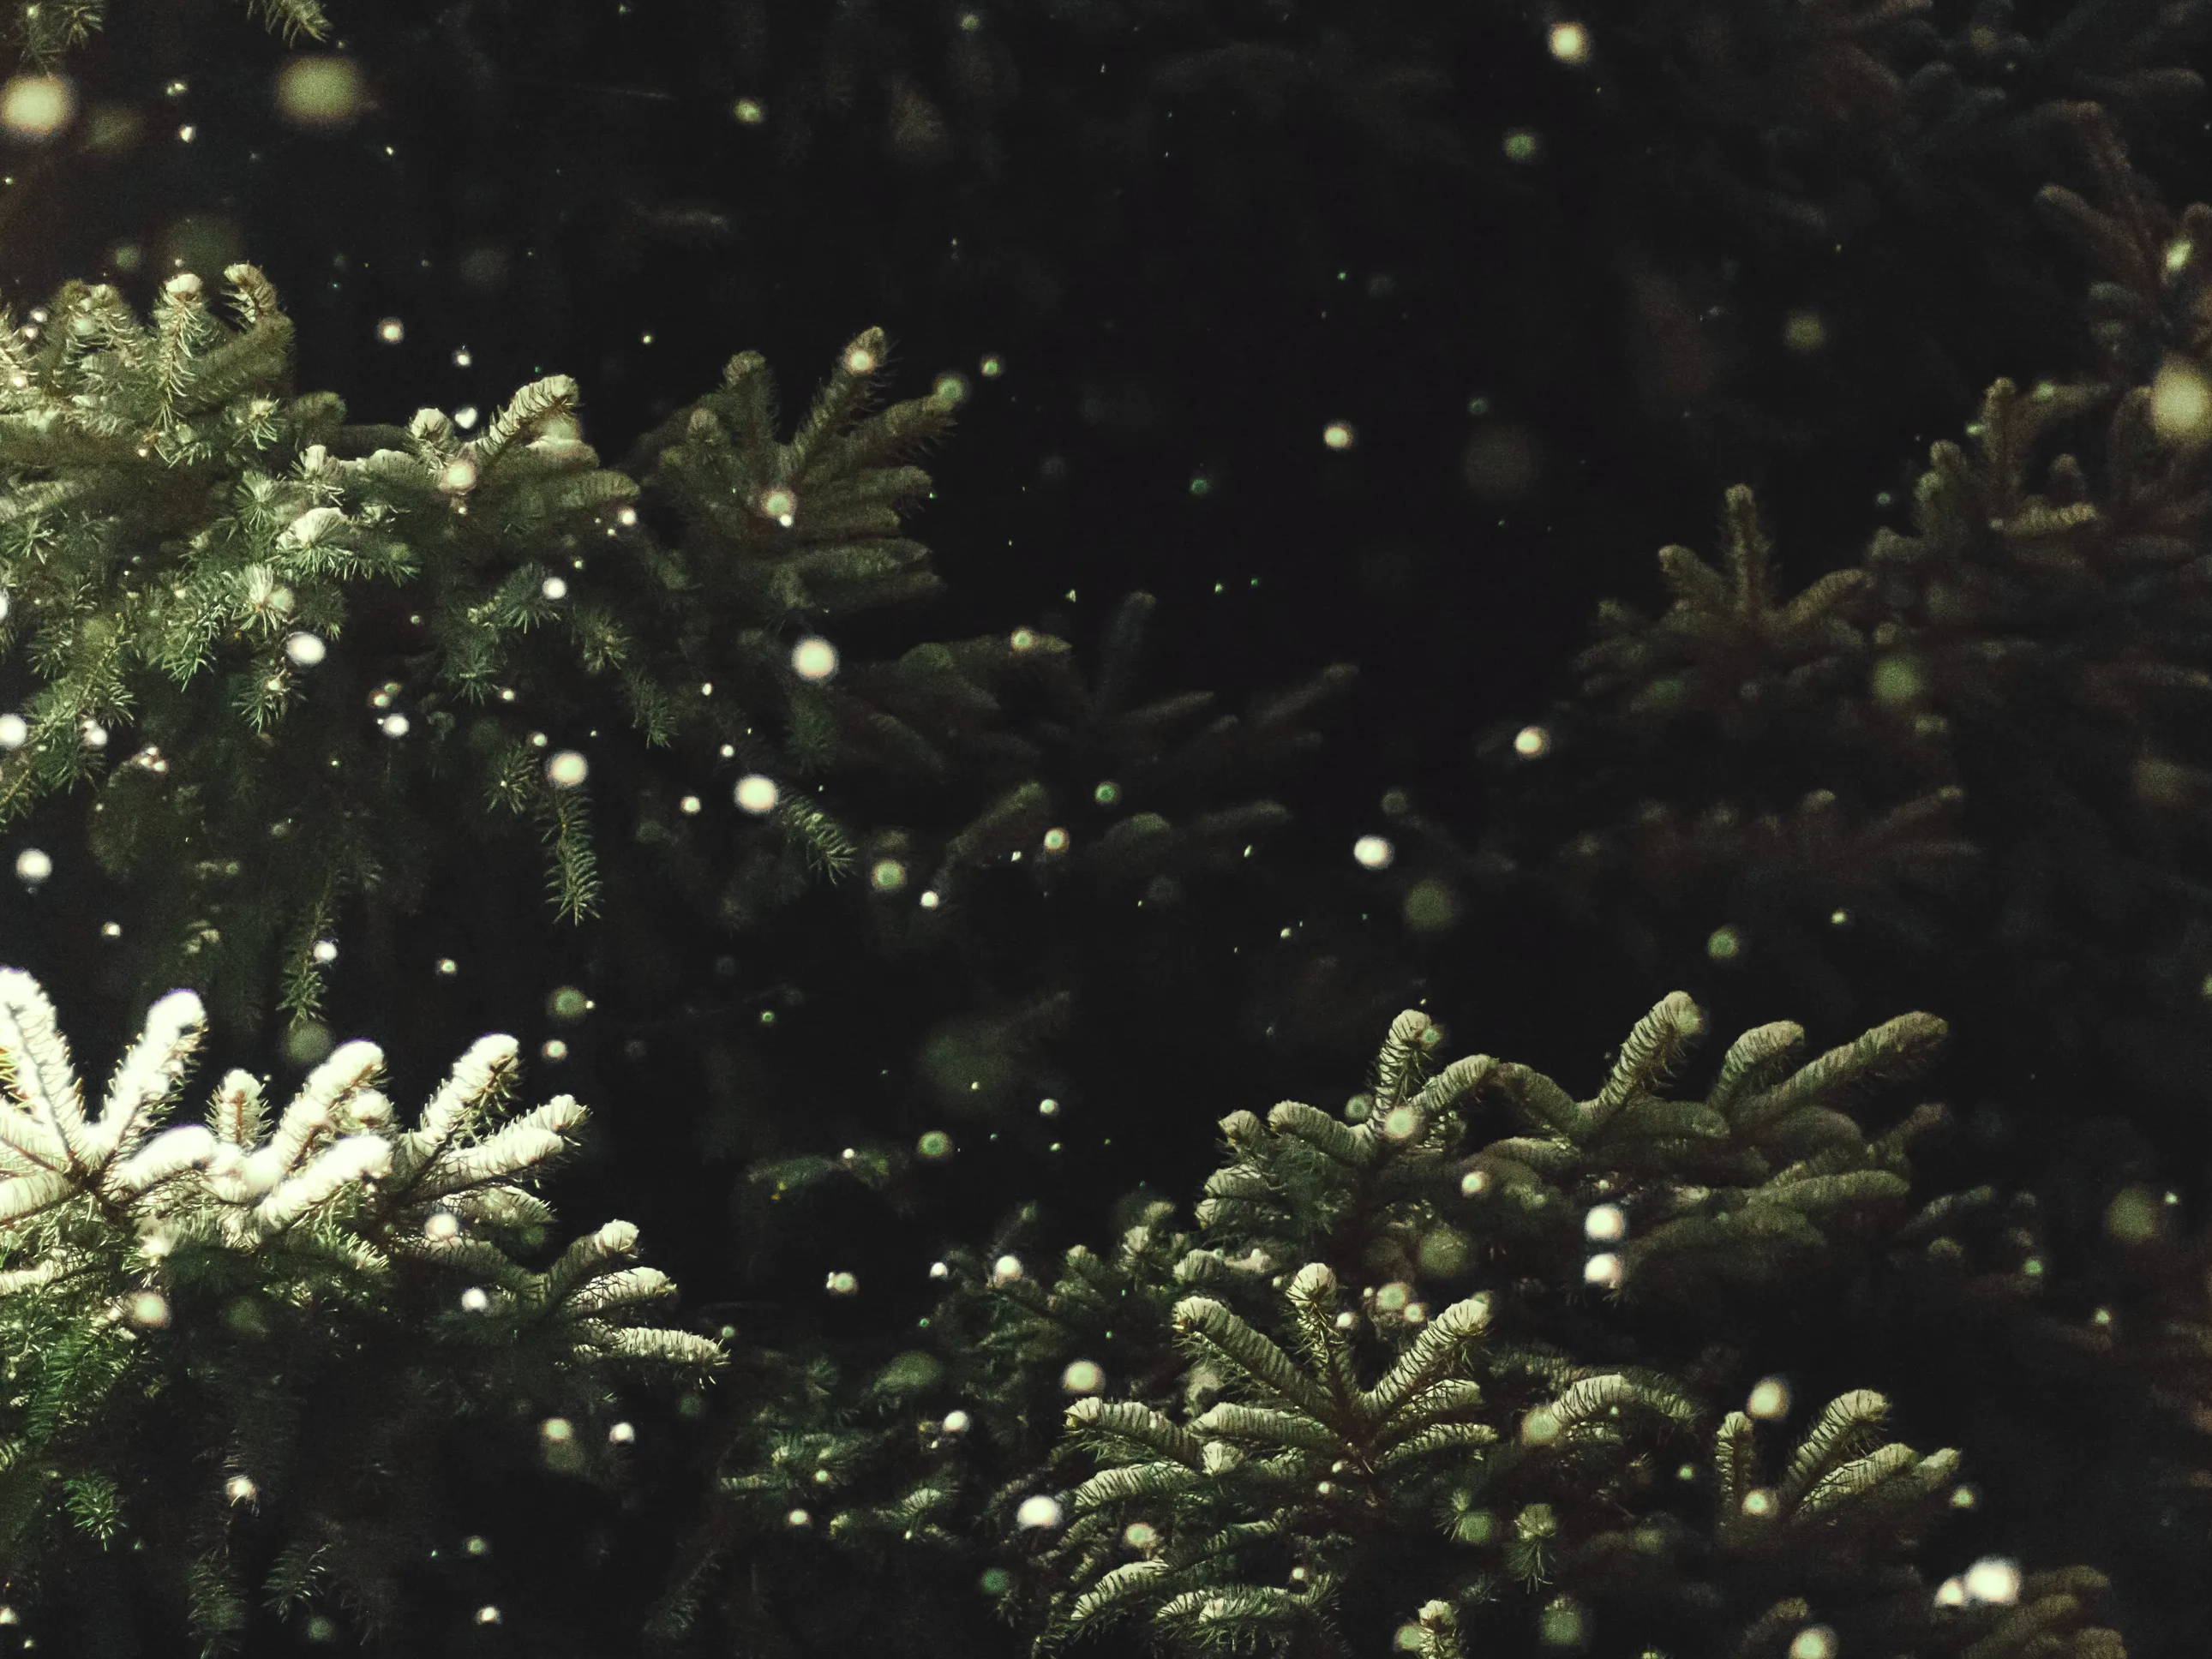 Closeup of snow falling amongst evergreen boughs